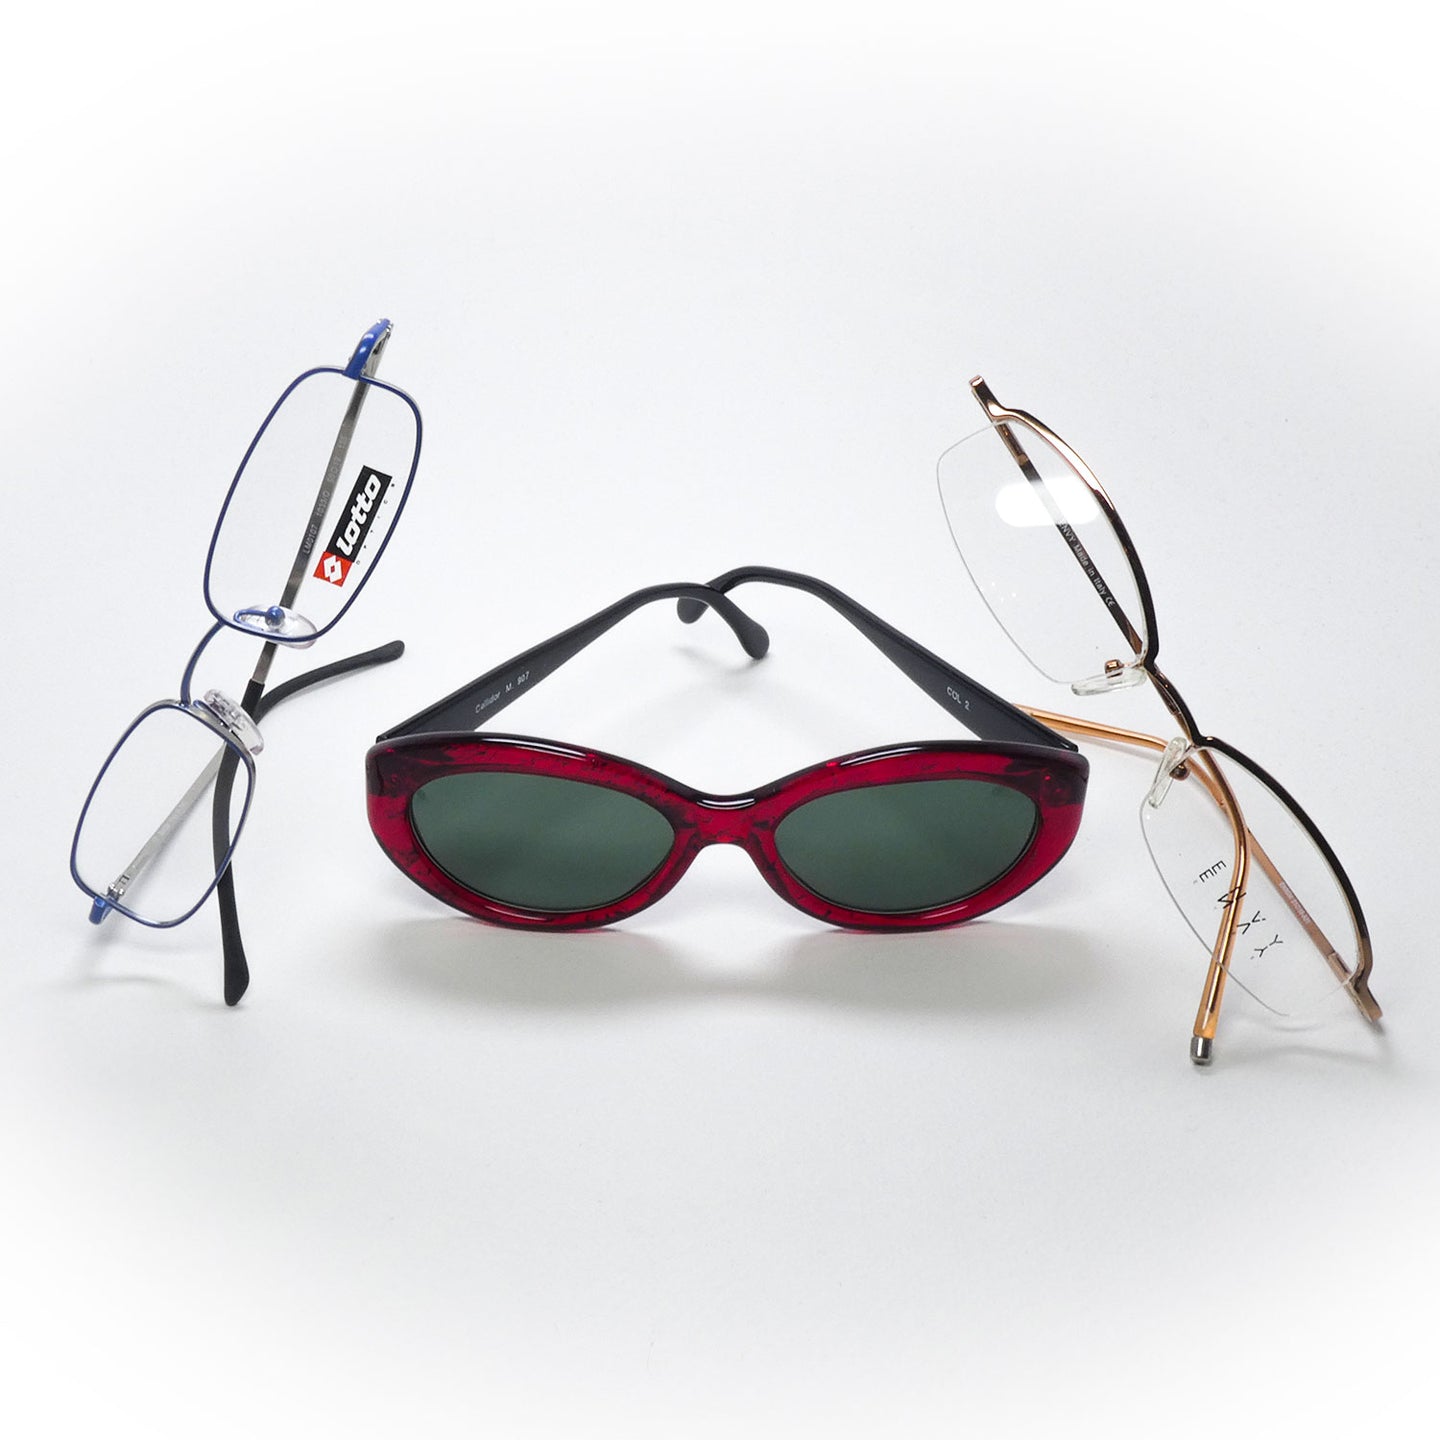 sunglasses opta & glasses envy & lotto offer packet 3